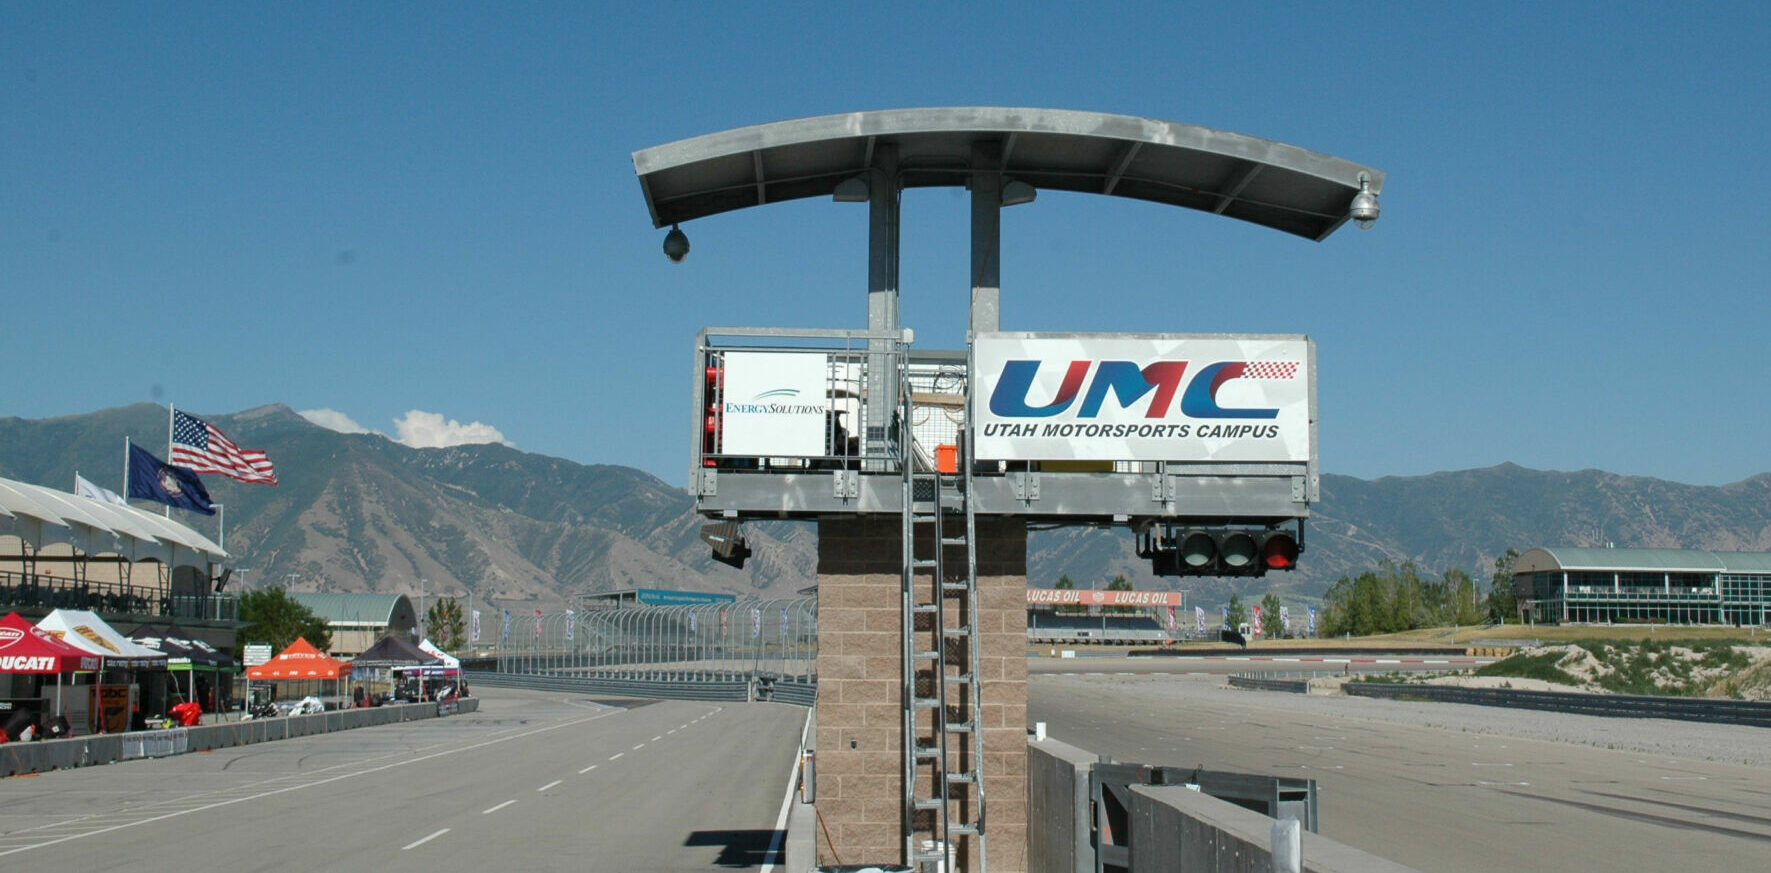 Utah Motorsports Campus. Photo by David Swarts.